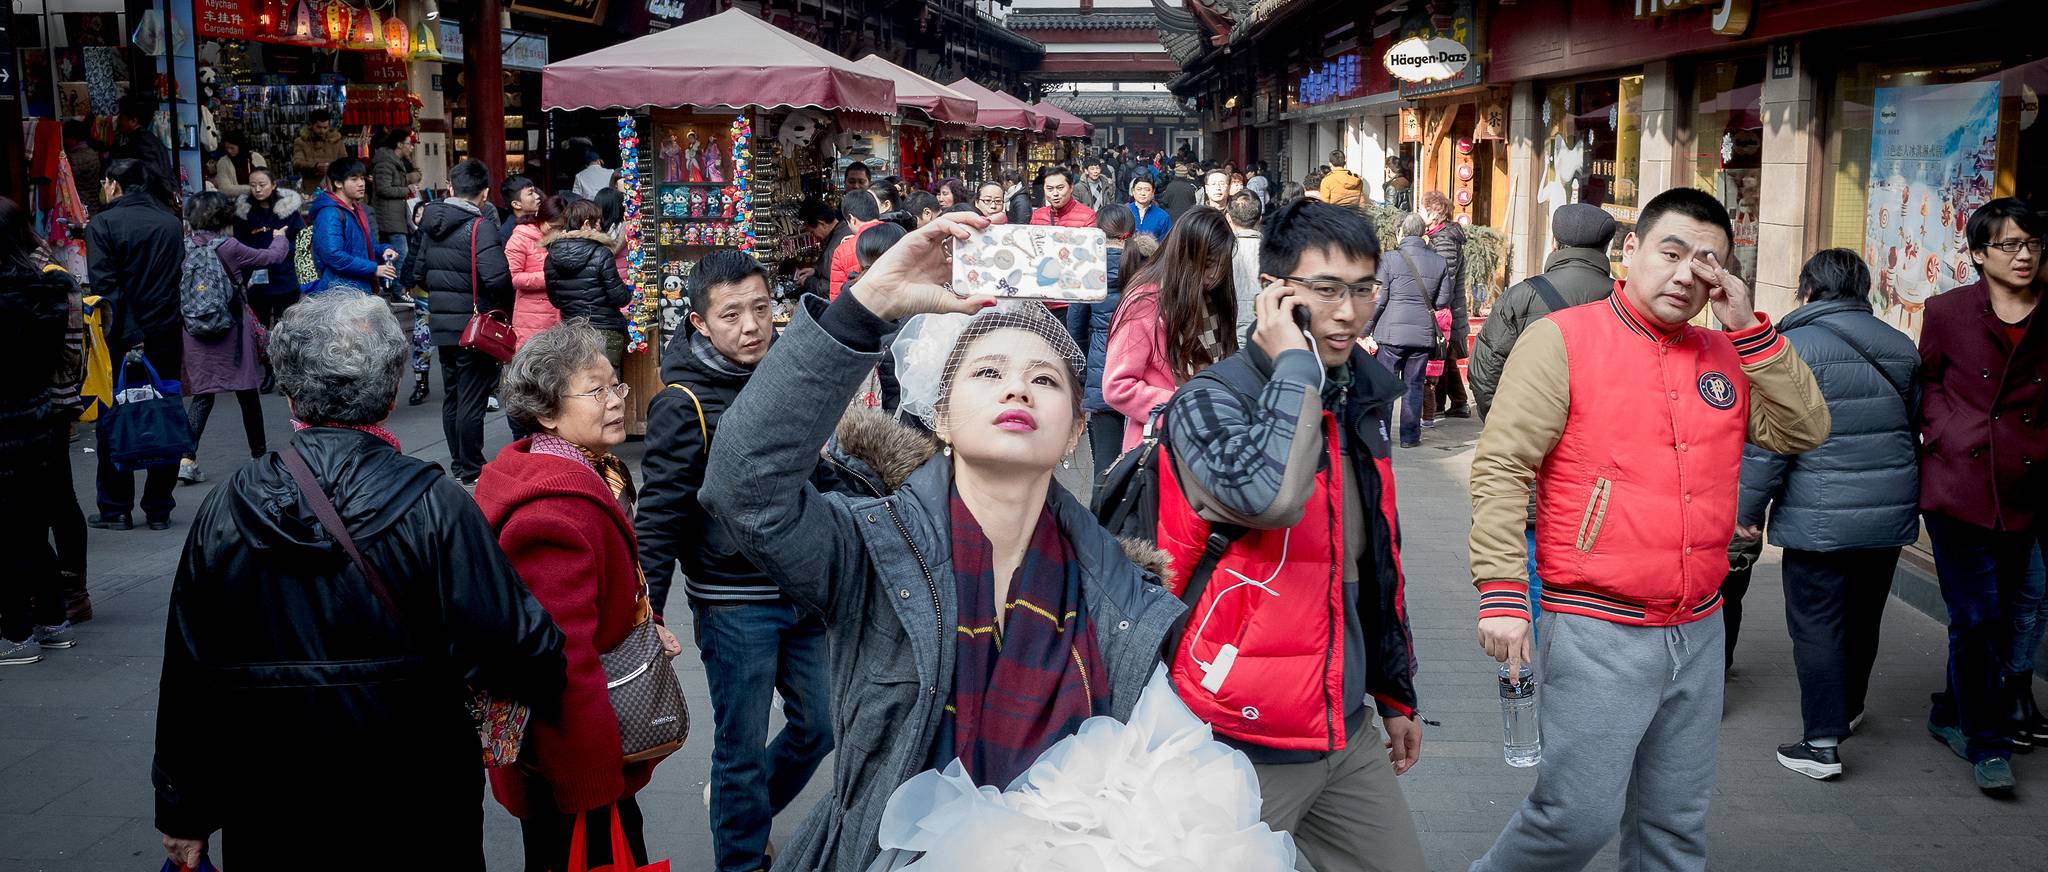 Binge shopping is big in China